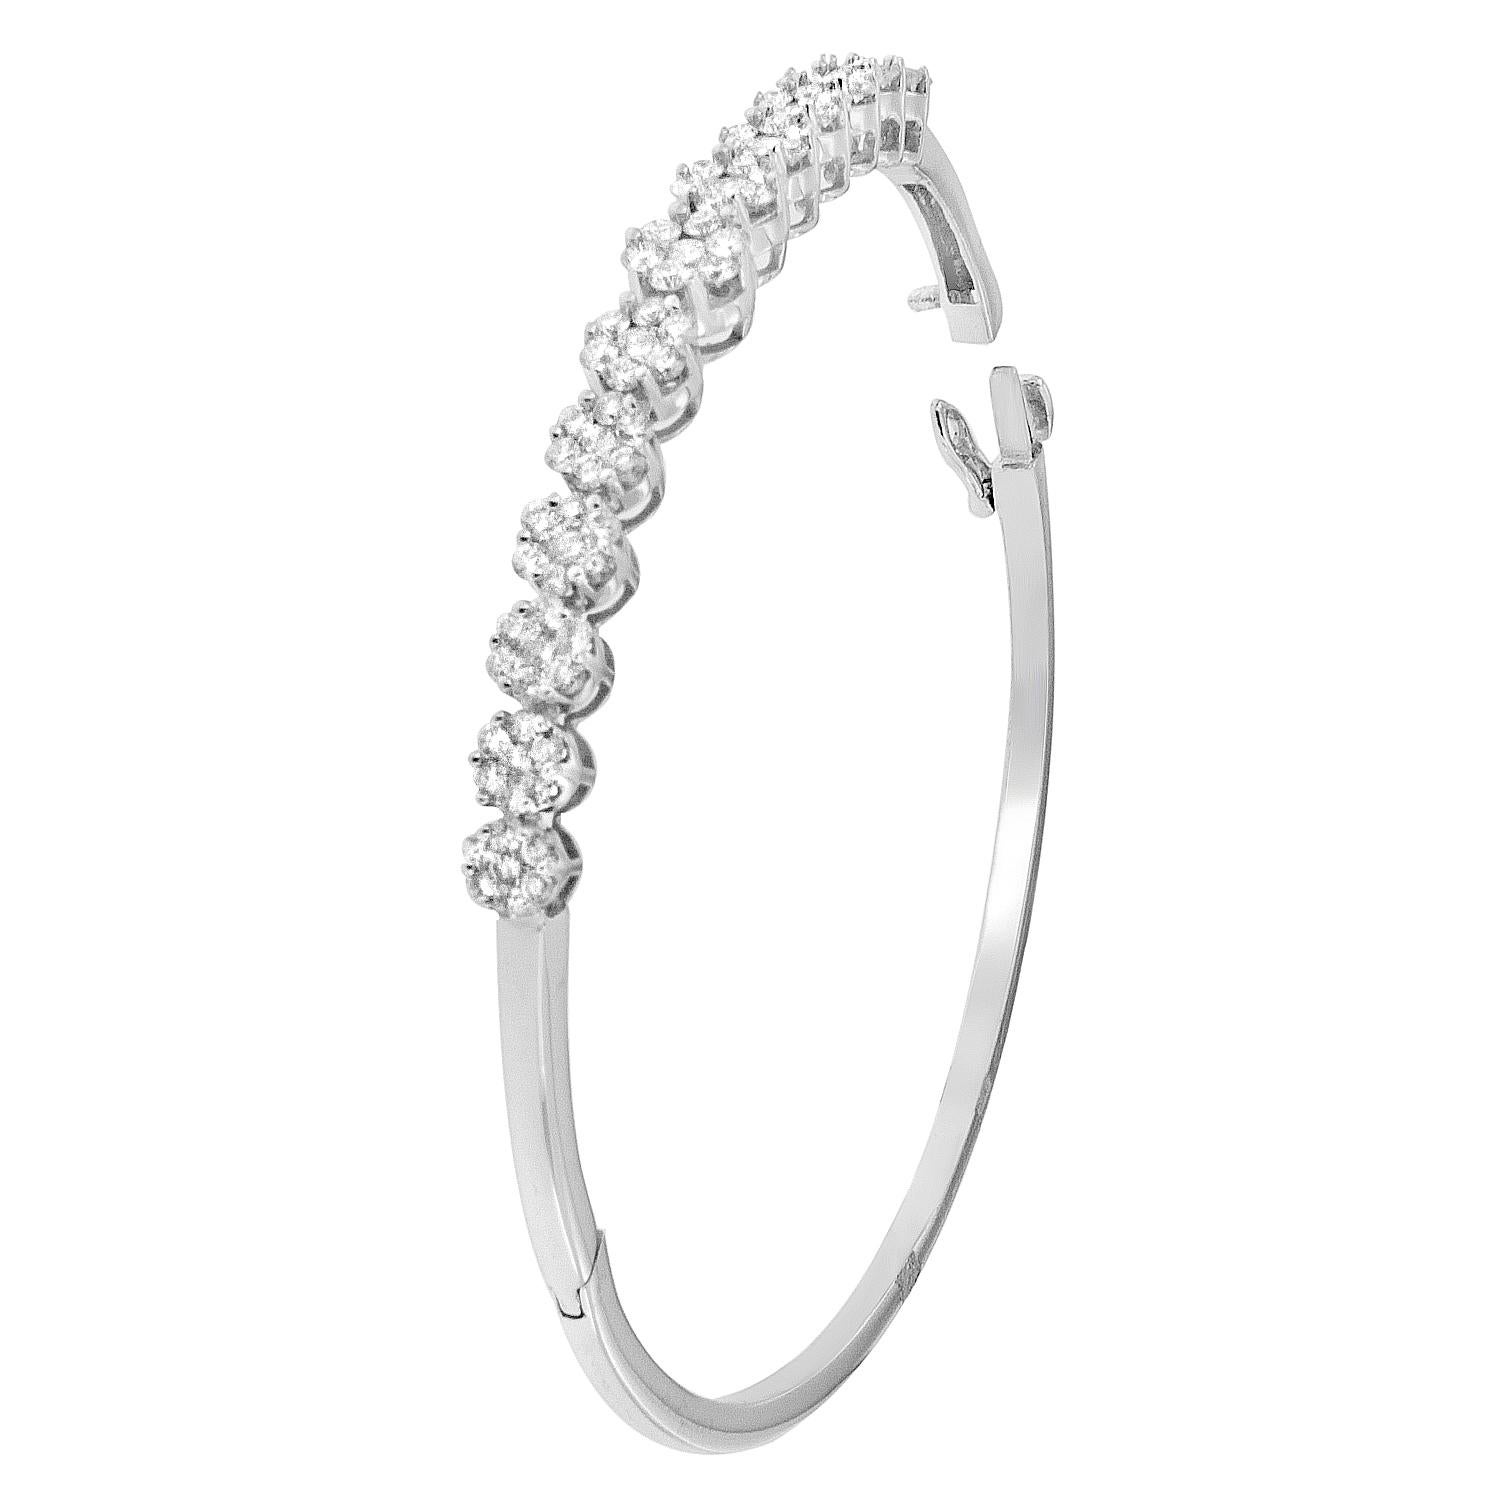 Contemporary 14k White Gold 2 5/8 Carat Diamond Floral Cluster Bangle Bracelet For Sale